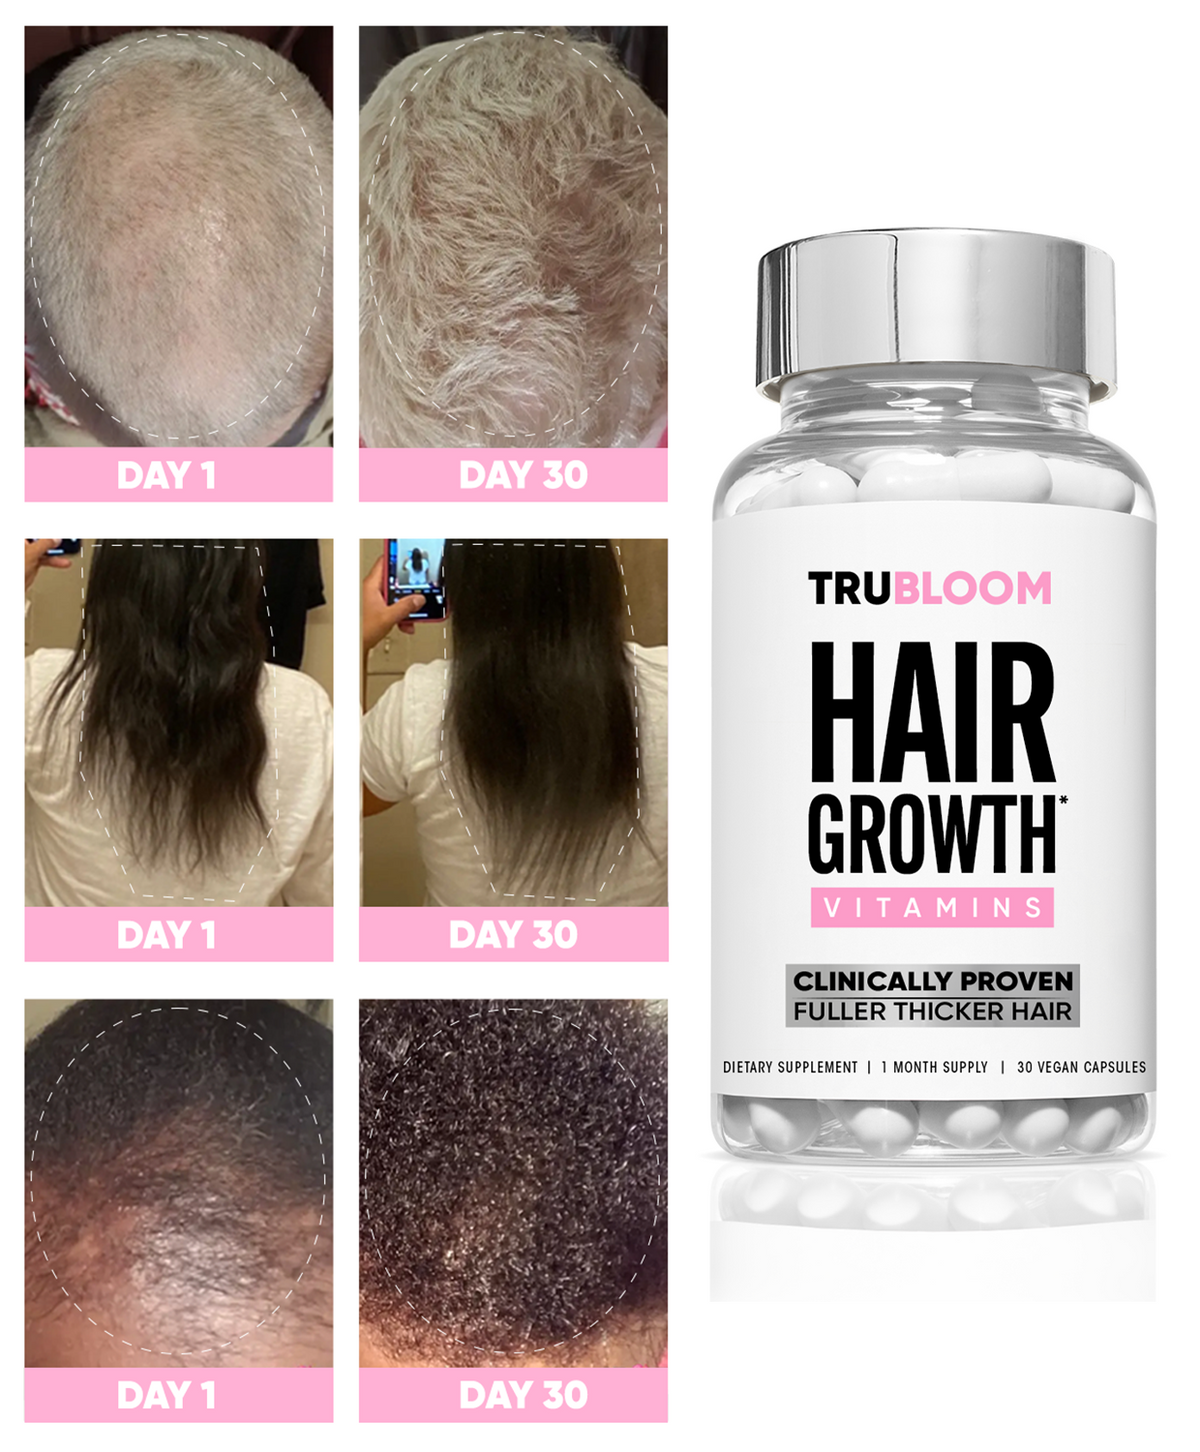 ST. TROPICA Hair Growth Vitamins - 1 Month Supply